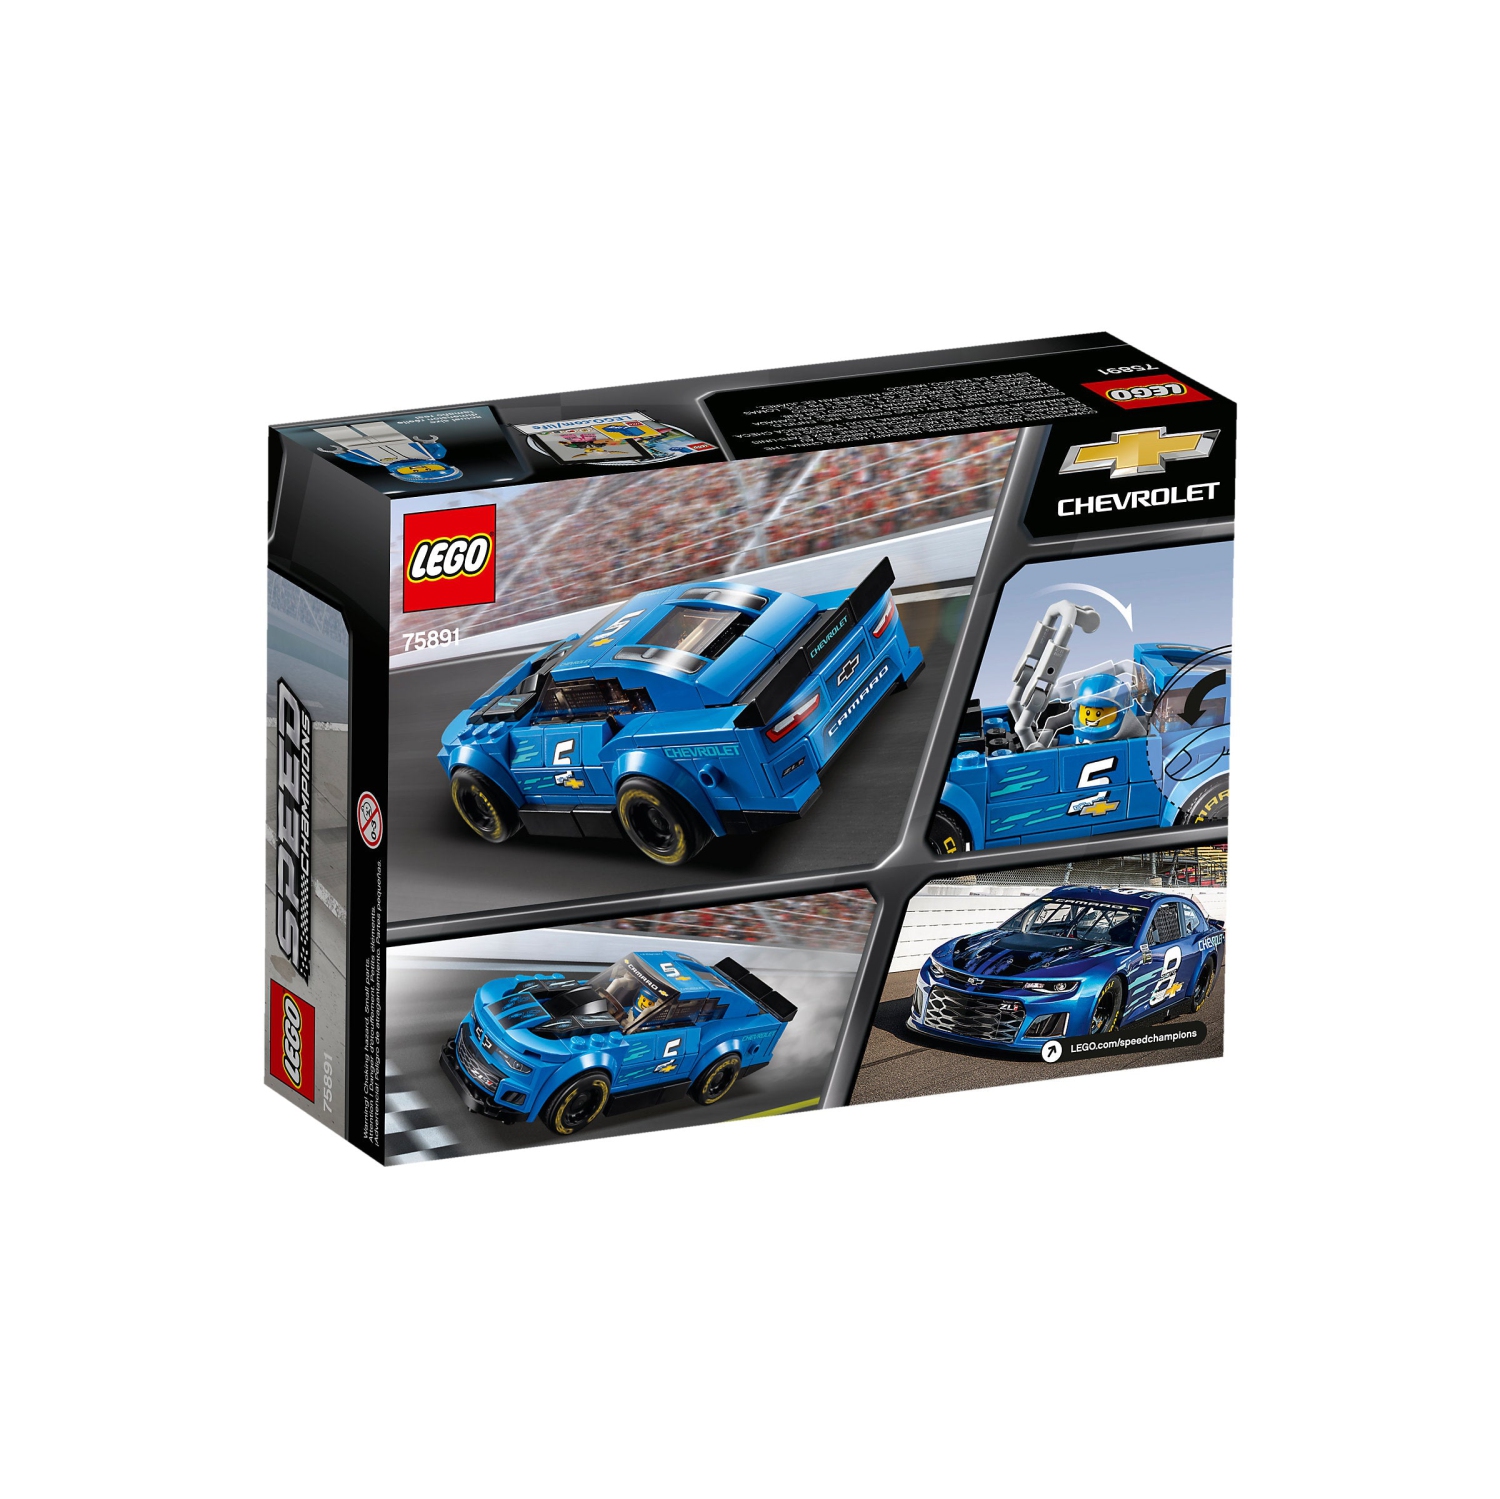 LEGO Speed Champions 75891 La voiture de course Chevrolet Camaro